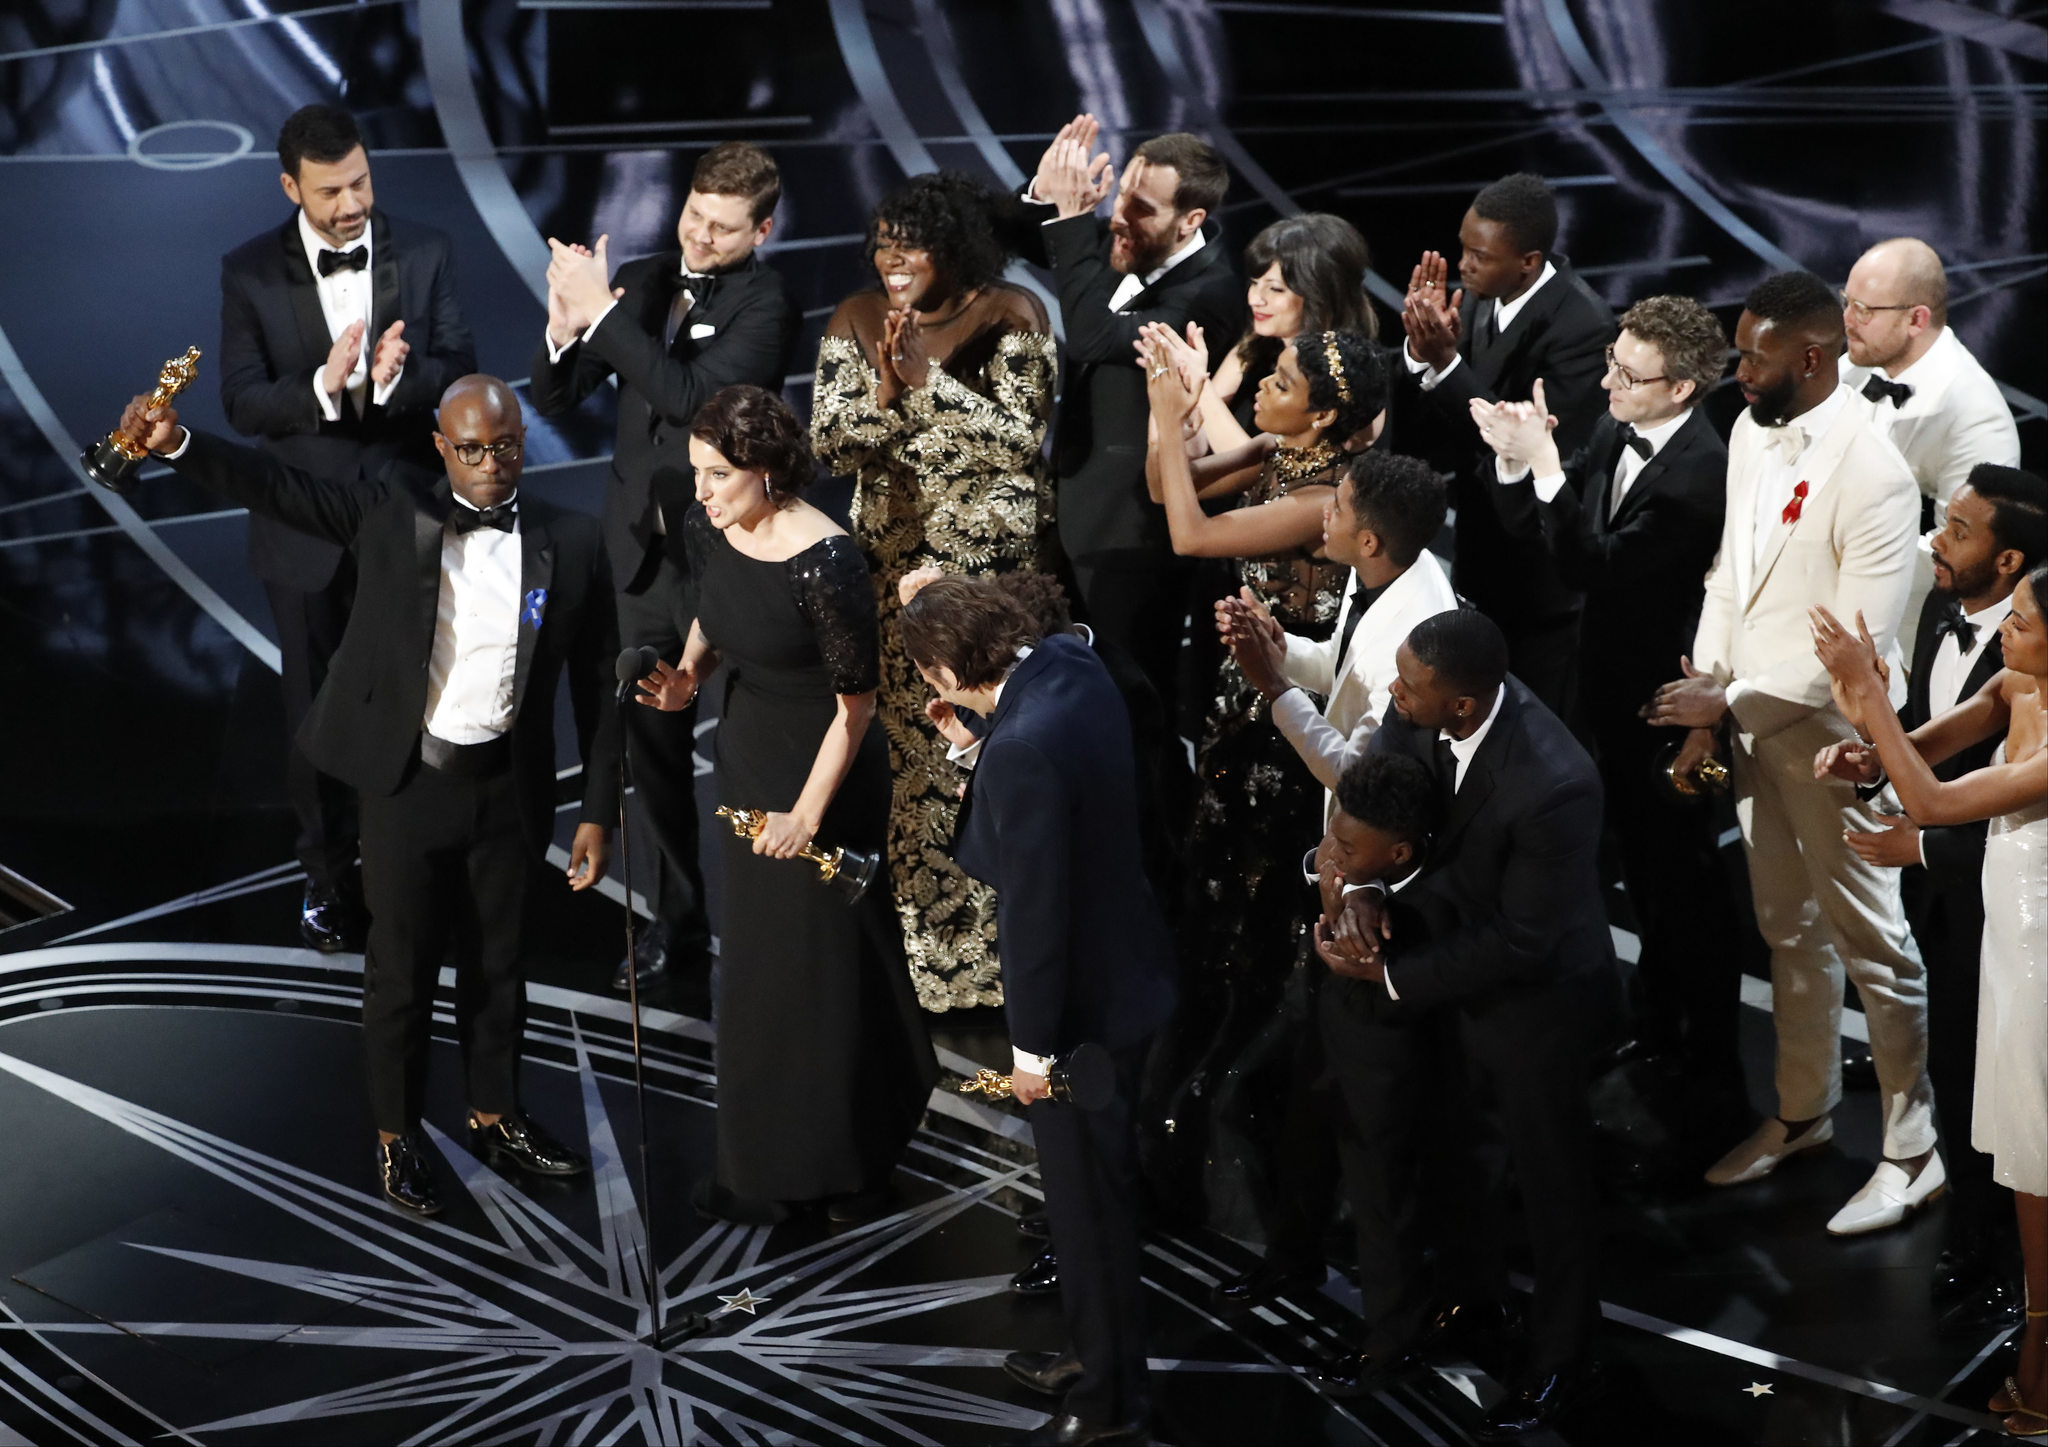 Oscars 2017 updates: 'Moonlight' named best picture after Warren Beatty gets wrong envelope